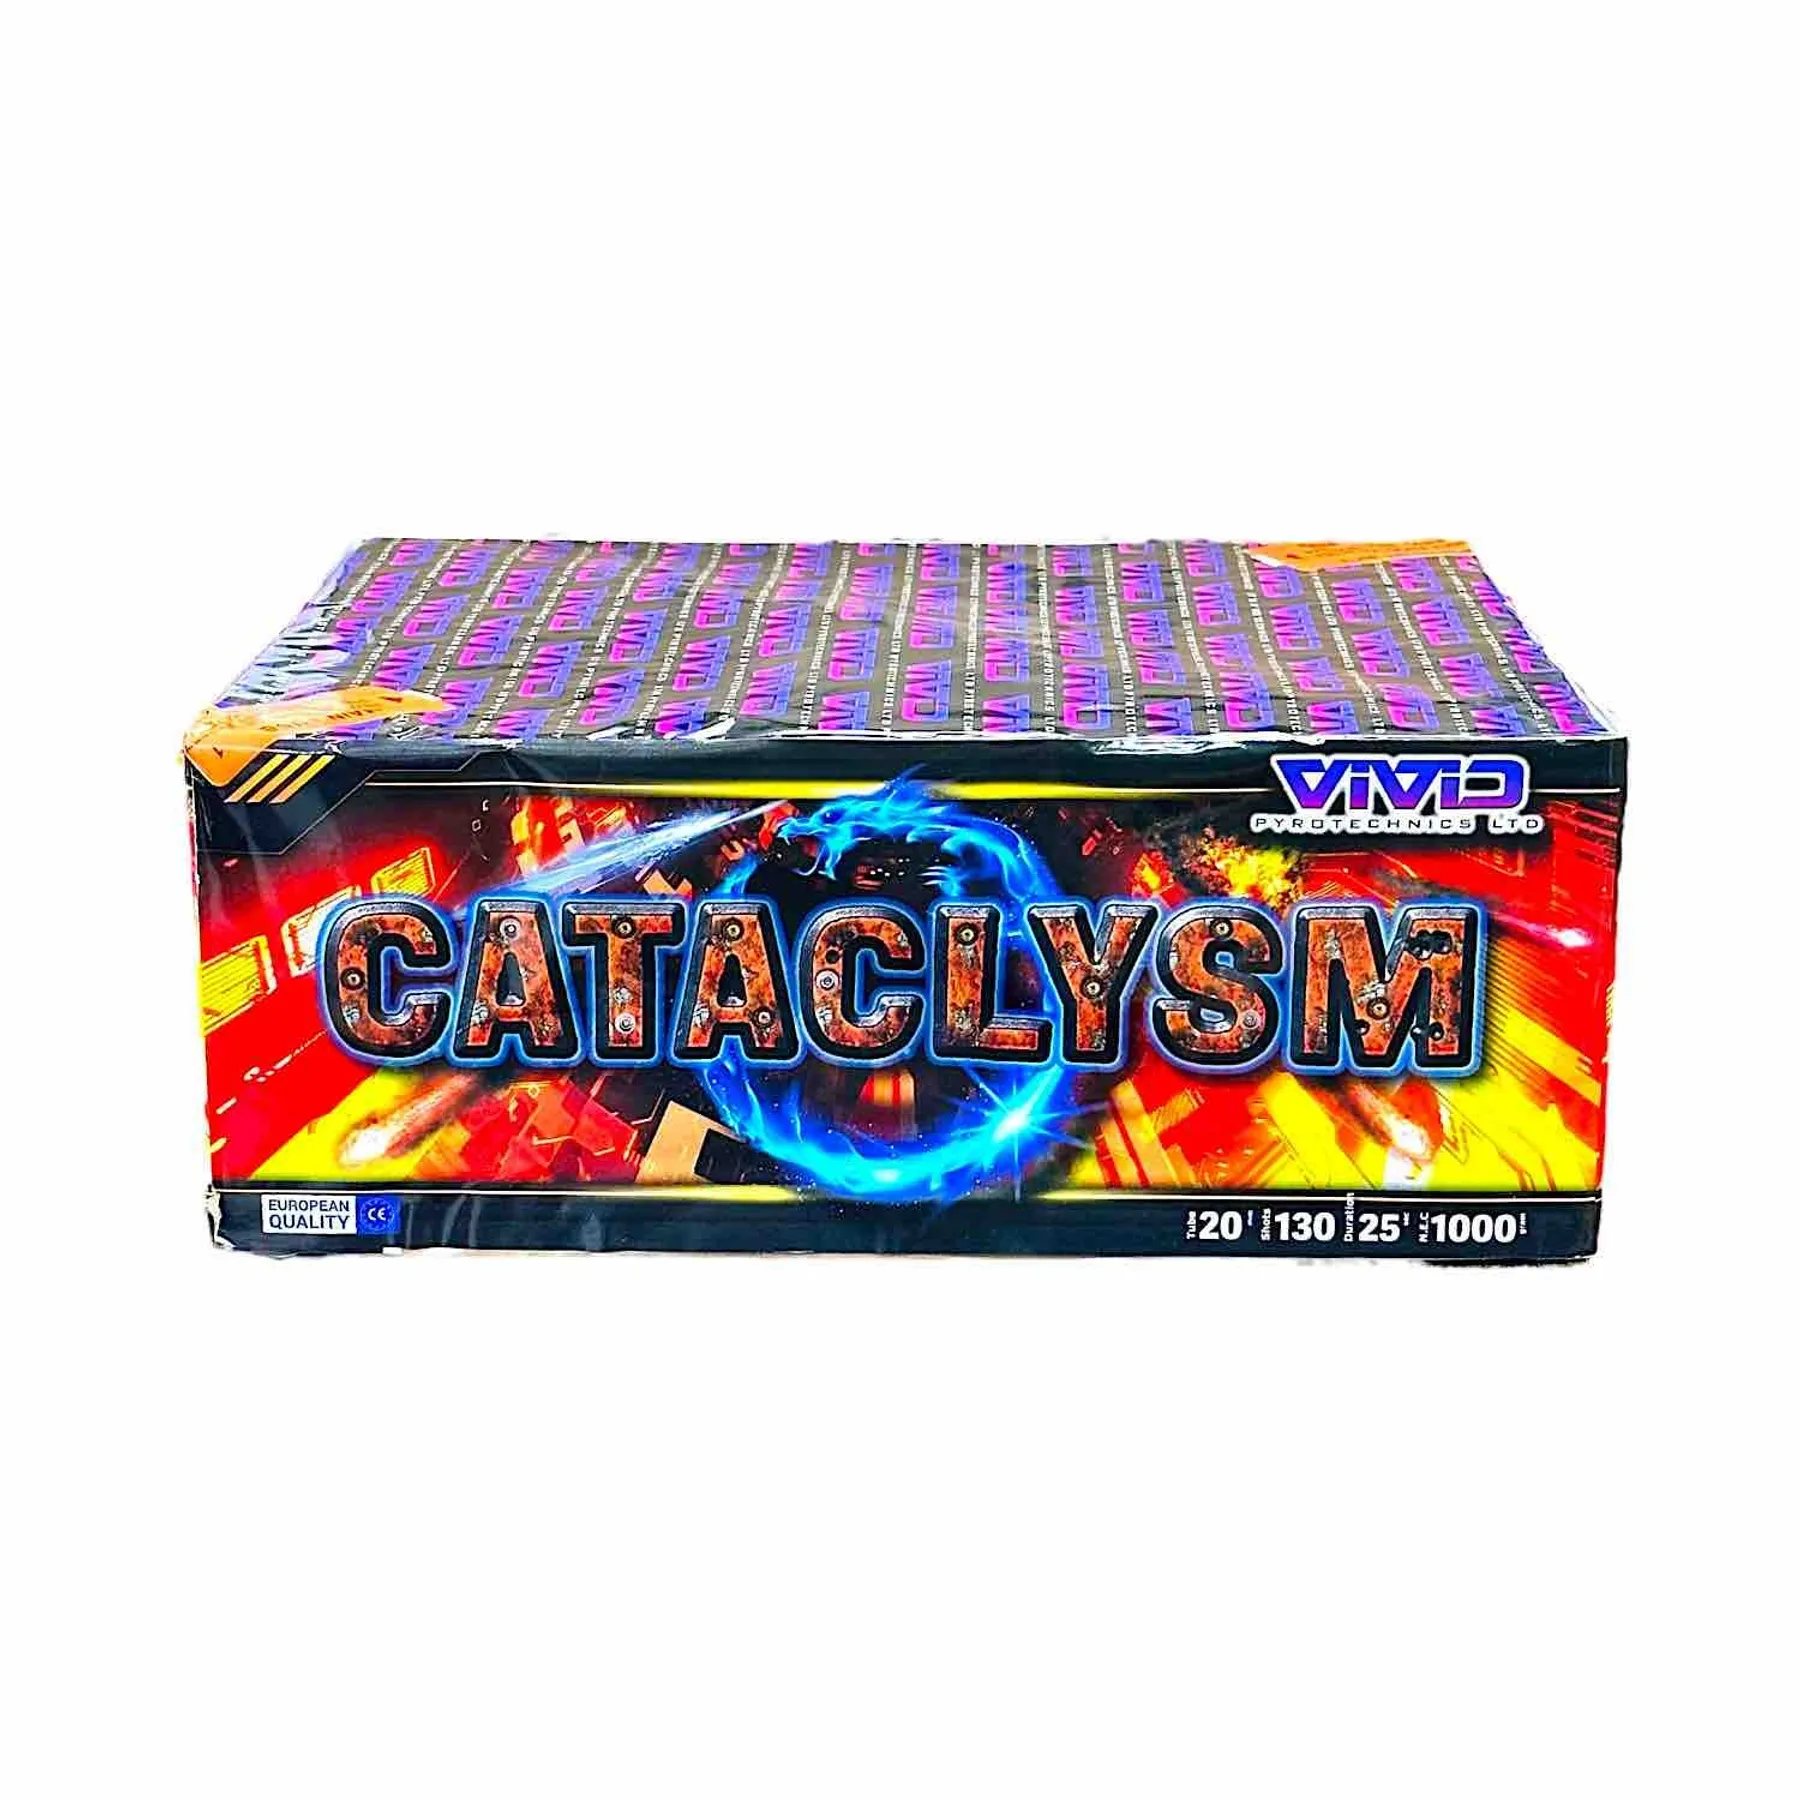 Cataclysm Vividd Pyrotechnics Manchester Fireworks